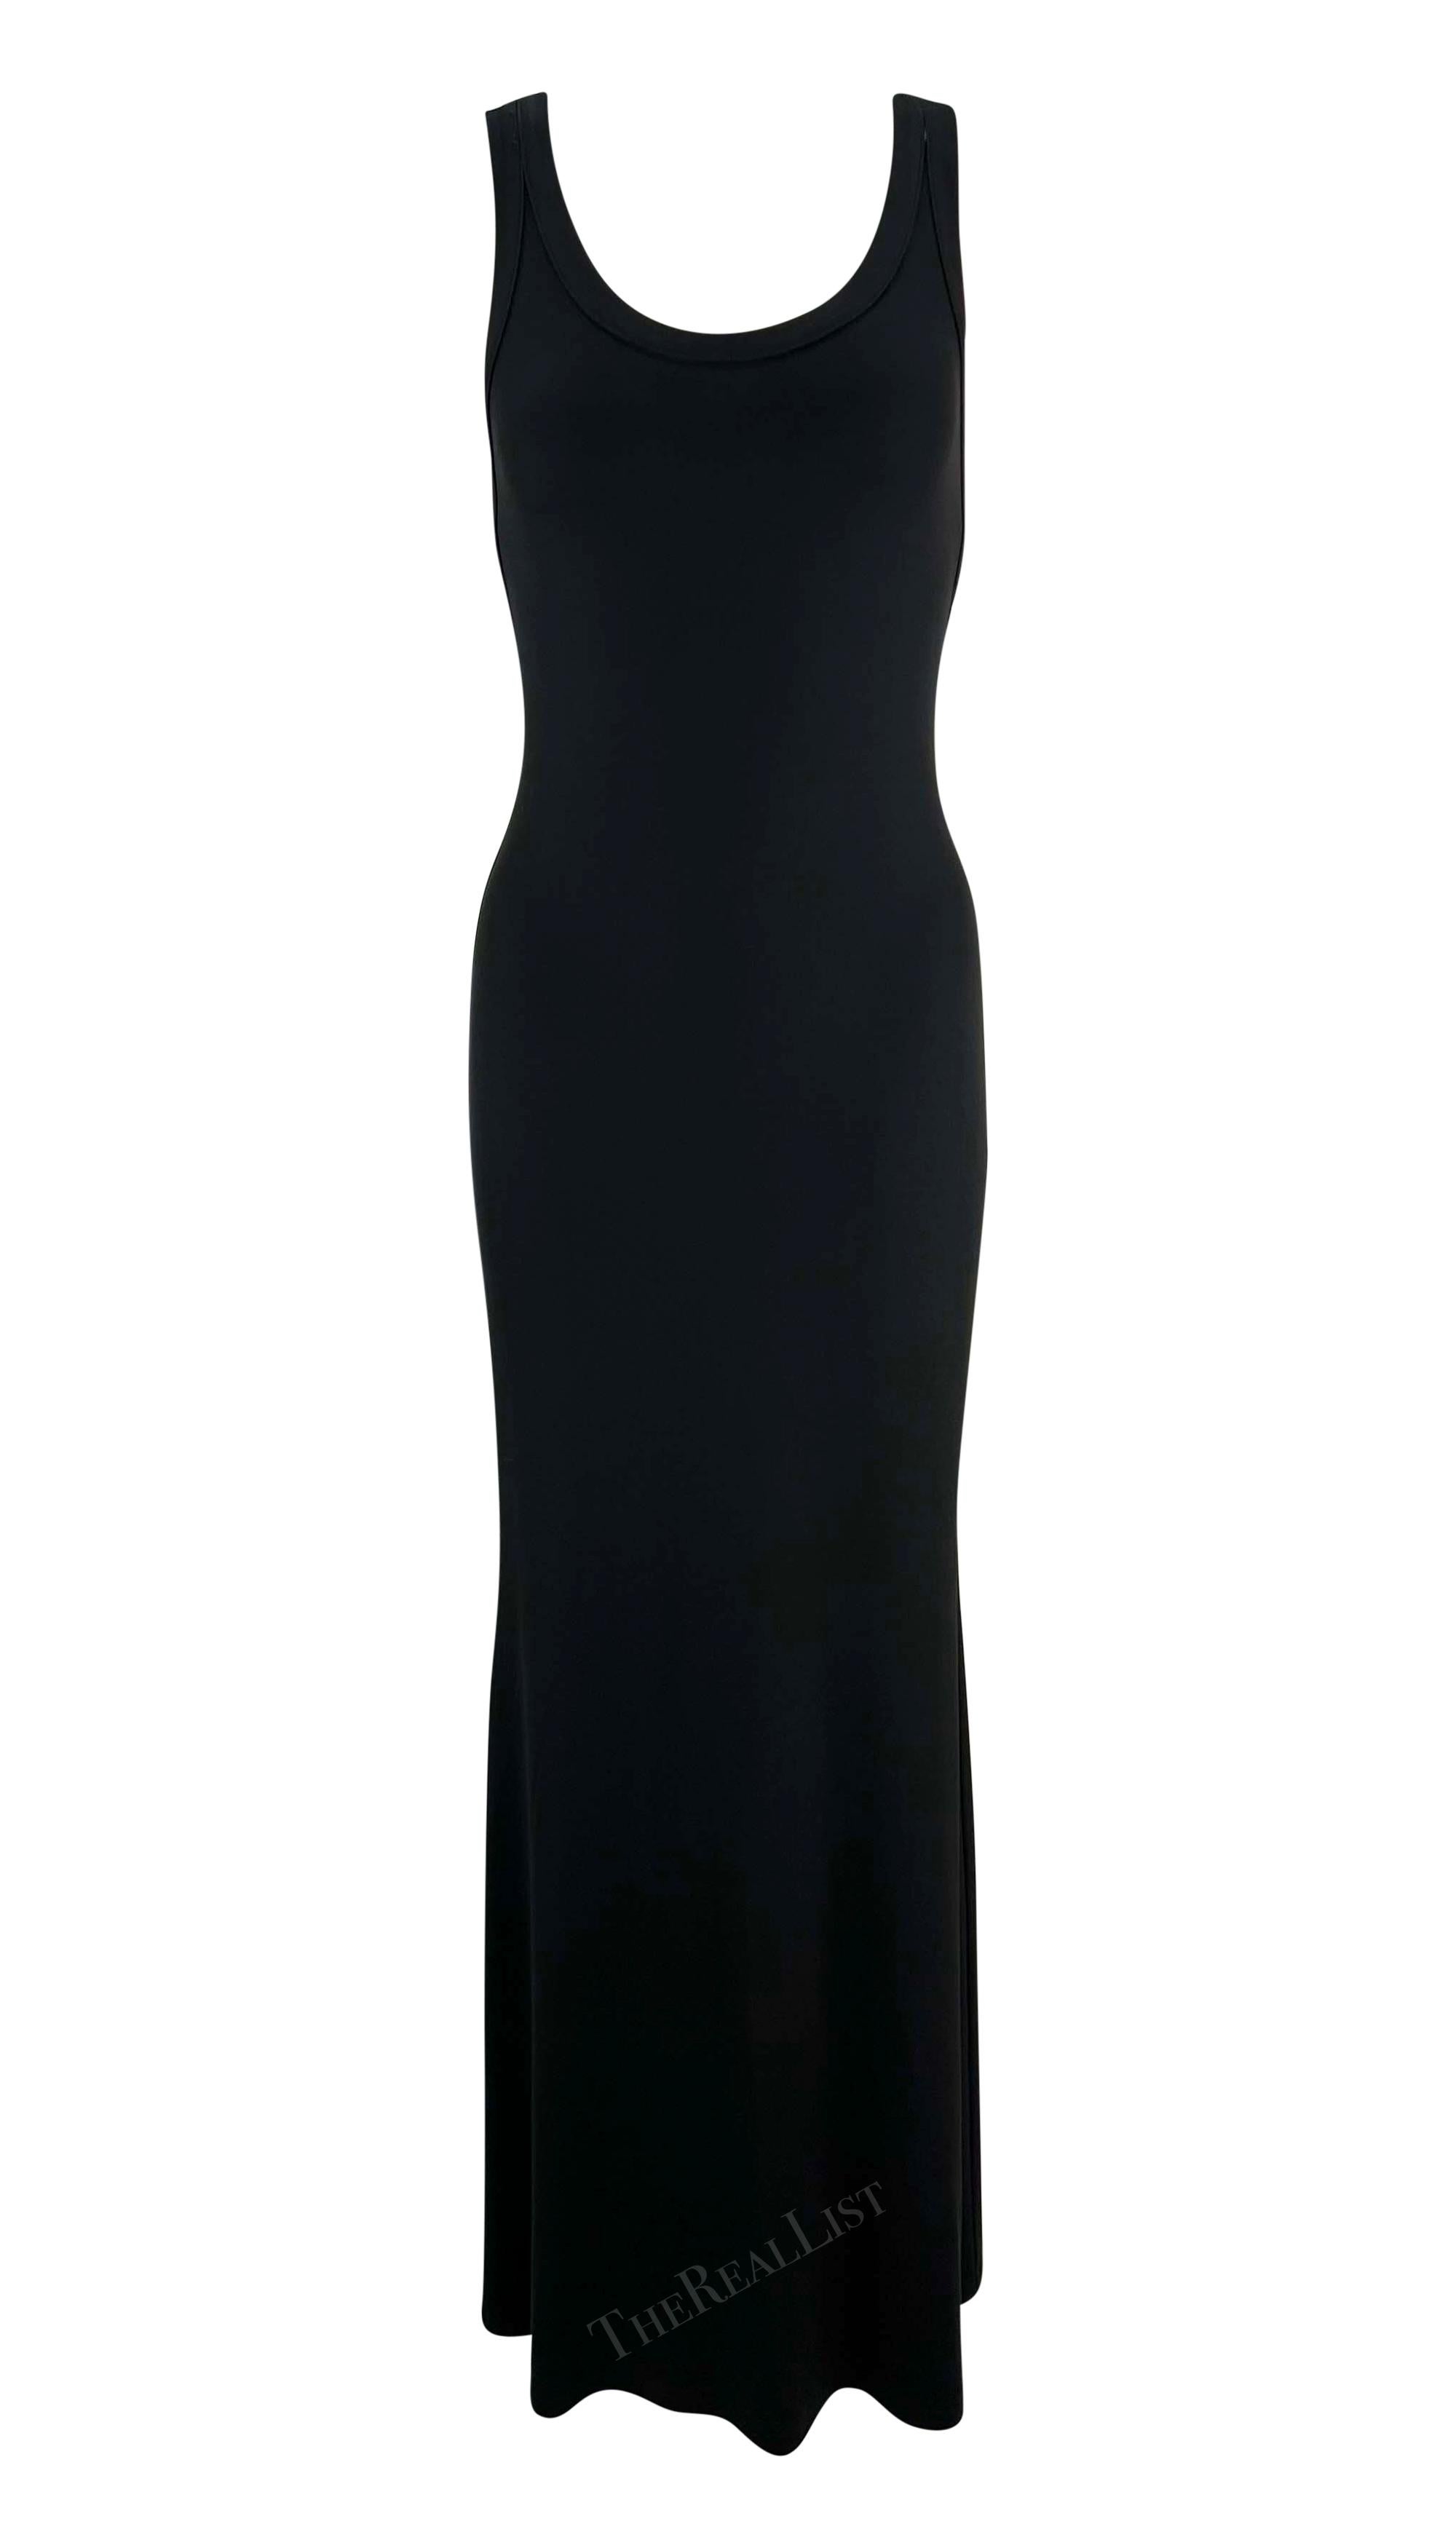 2000s Celine Black Stretchy Backless Bondage-Inspired Strap Gown For Sale 2